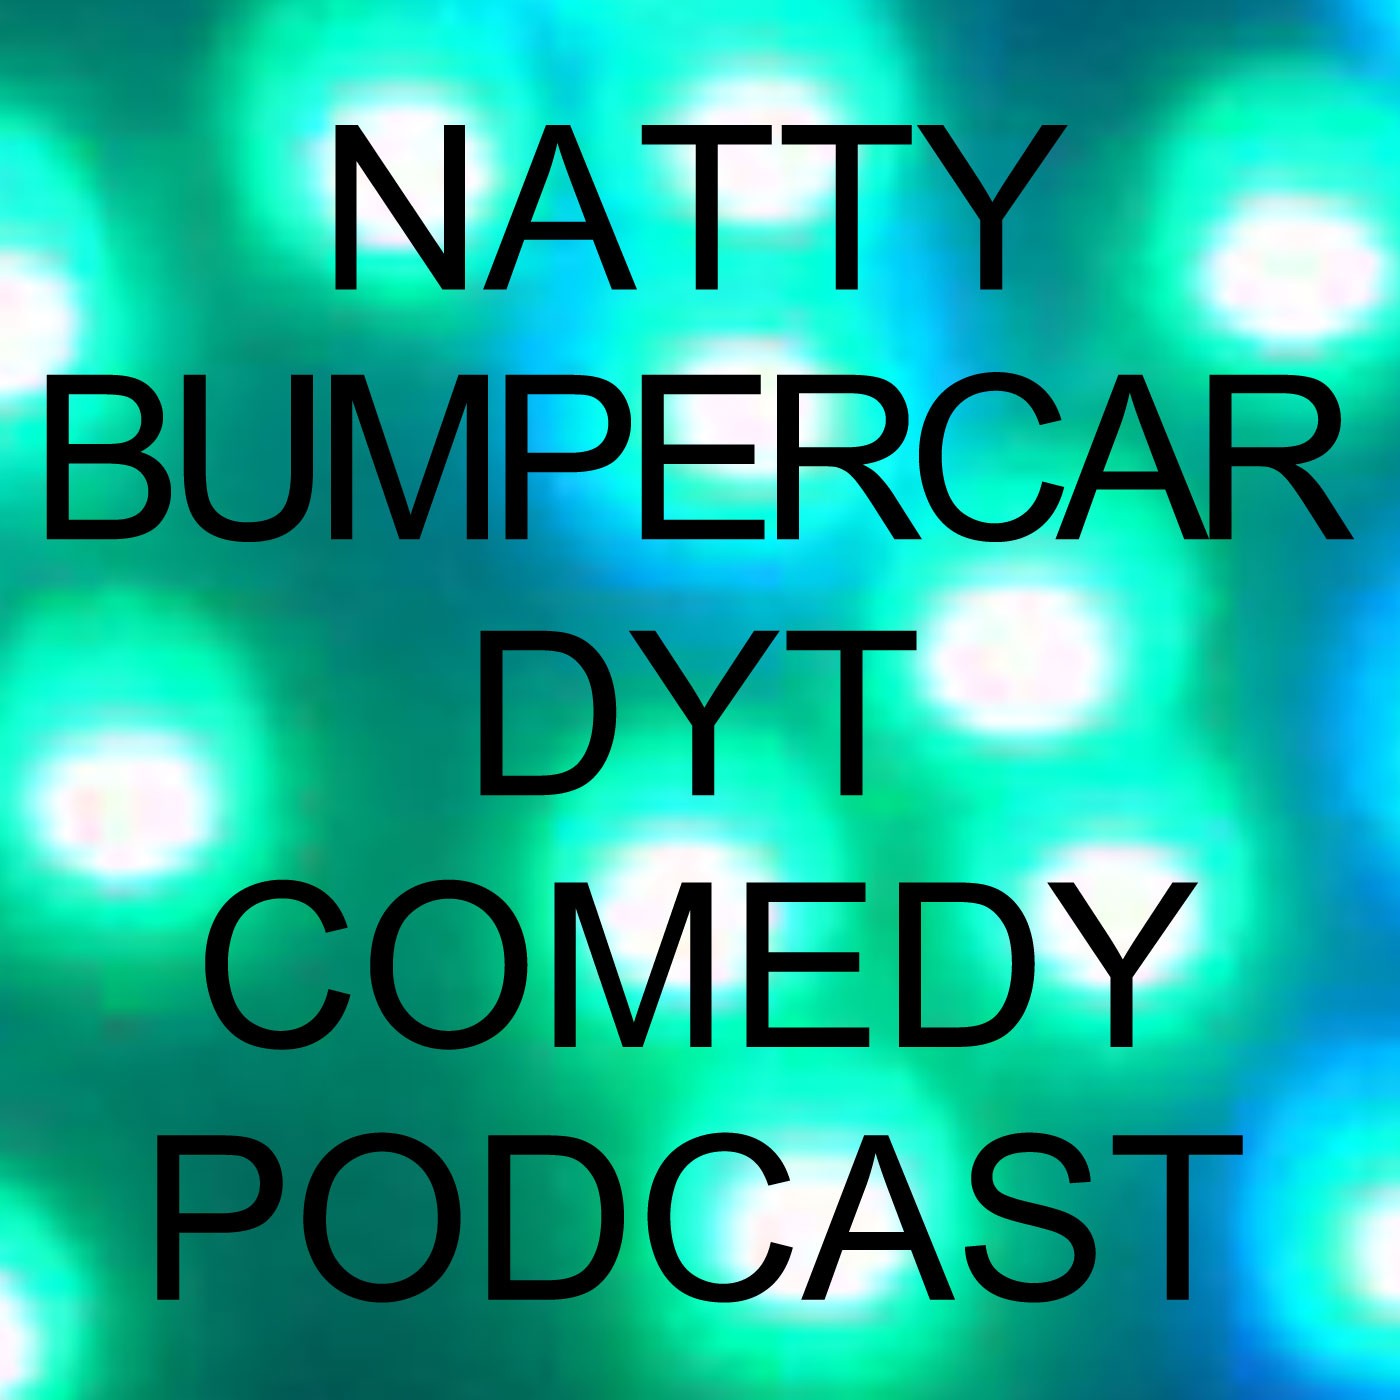 Natty Bumpercar DYT Comedy Podcast